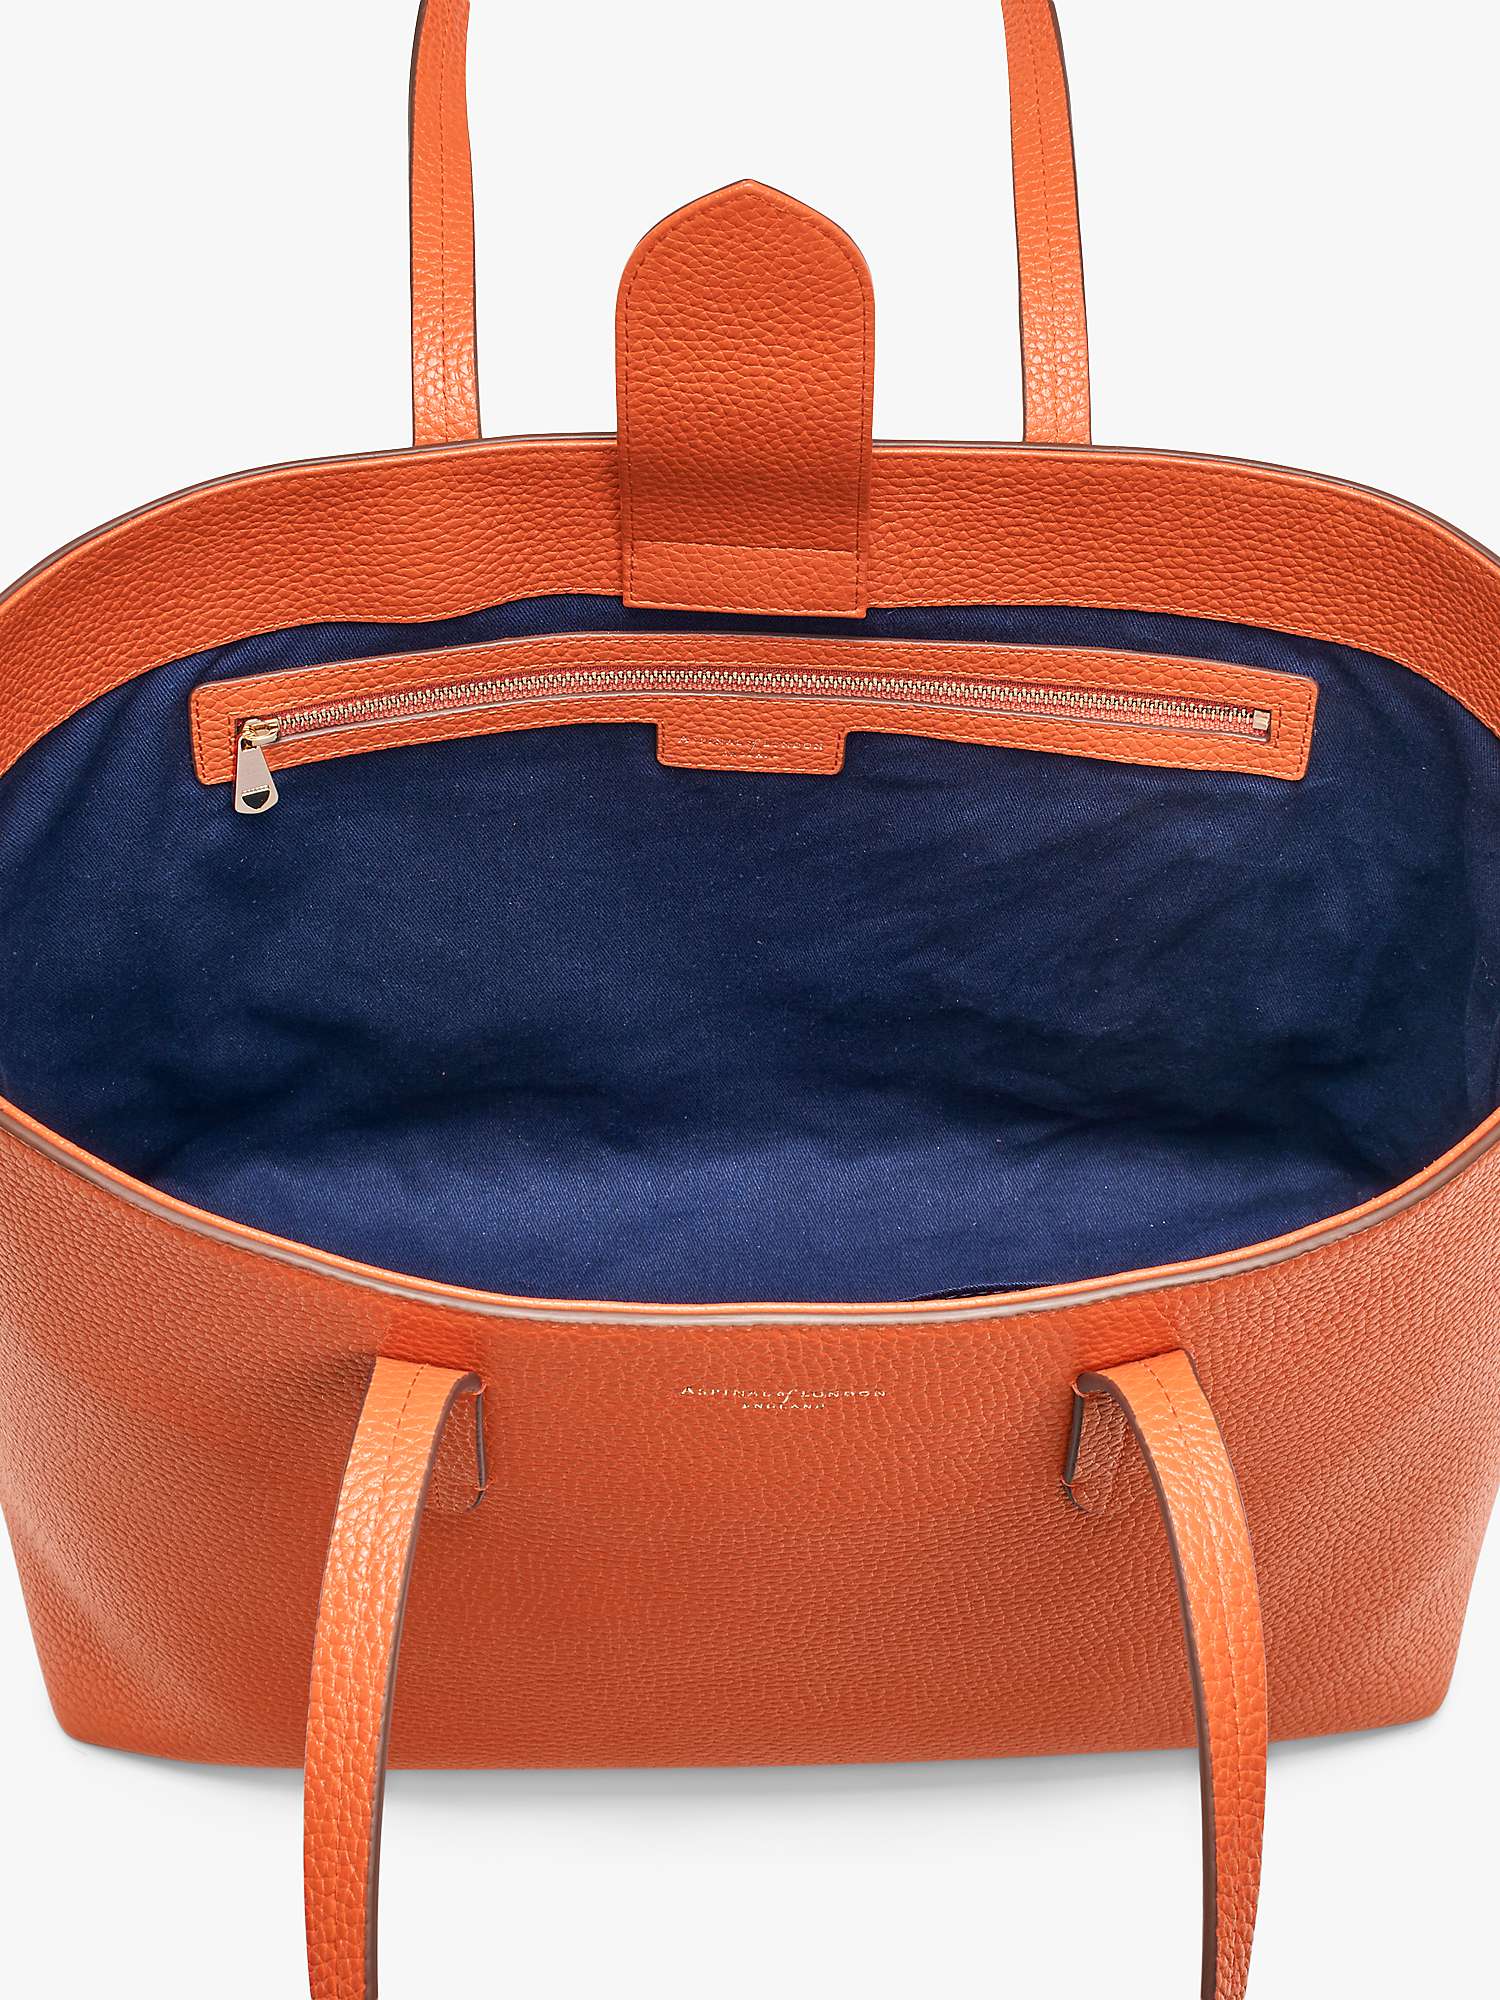 Buy Aspinal of London Regent East West Pebble Leather Tote Bag Online at johnlewis.com